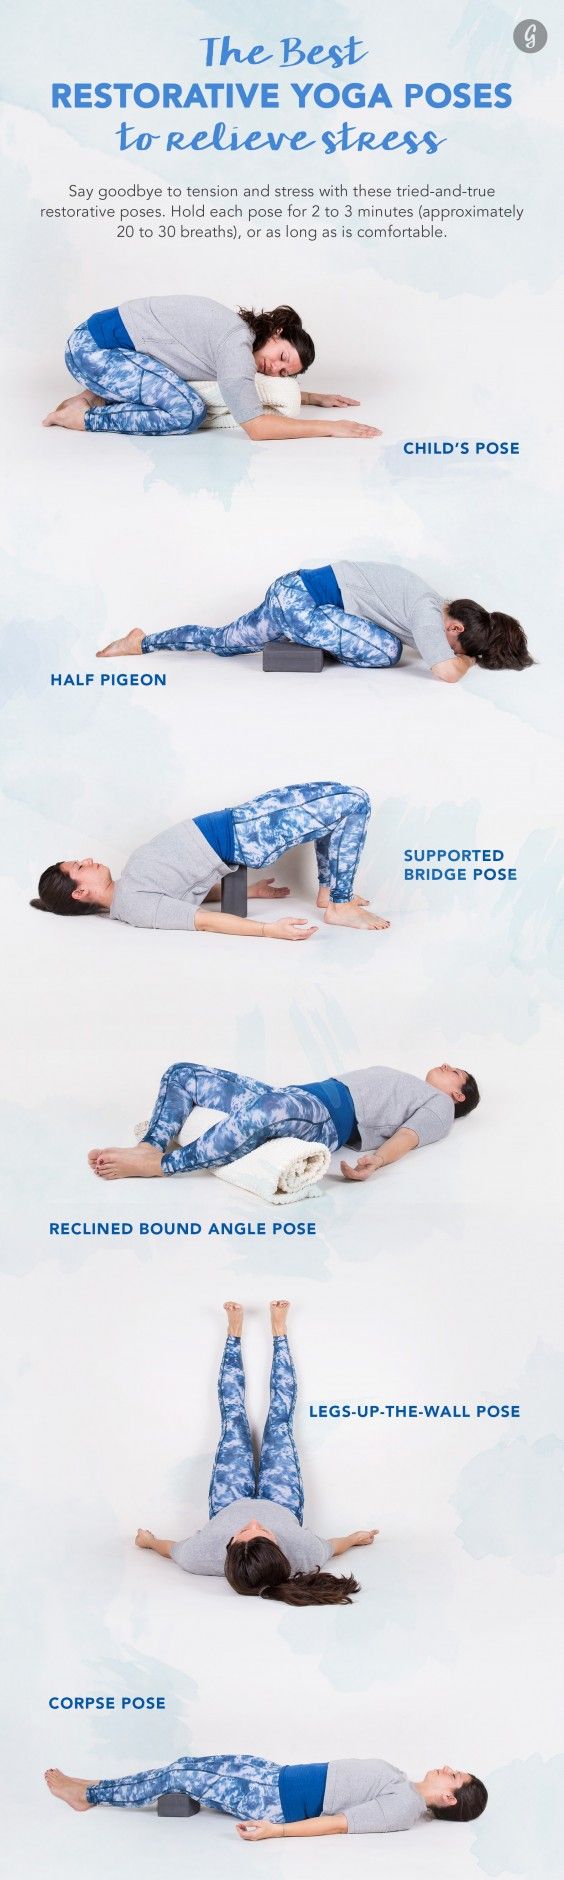 The Best Restorative Yoga Poses